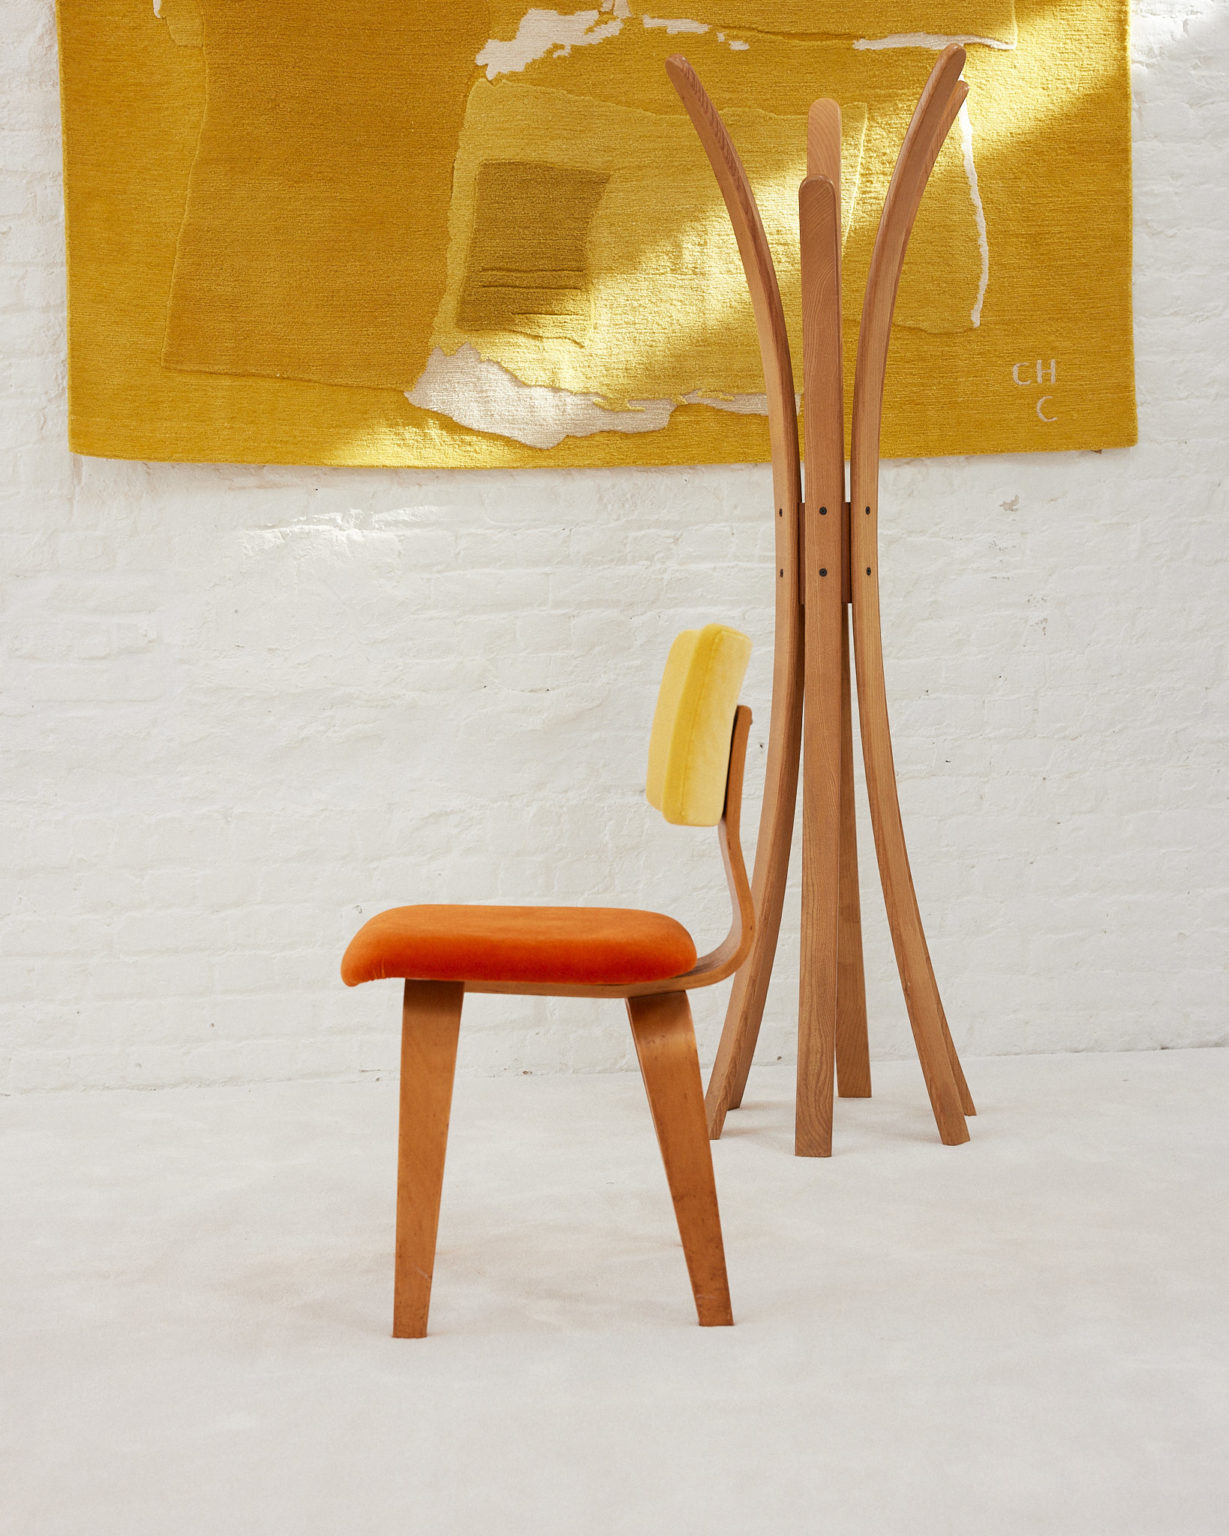 "SB 02" chair by Cees Braakman